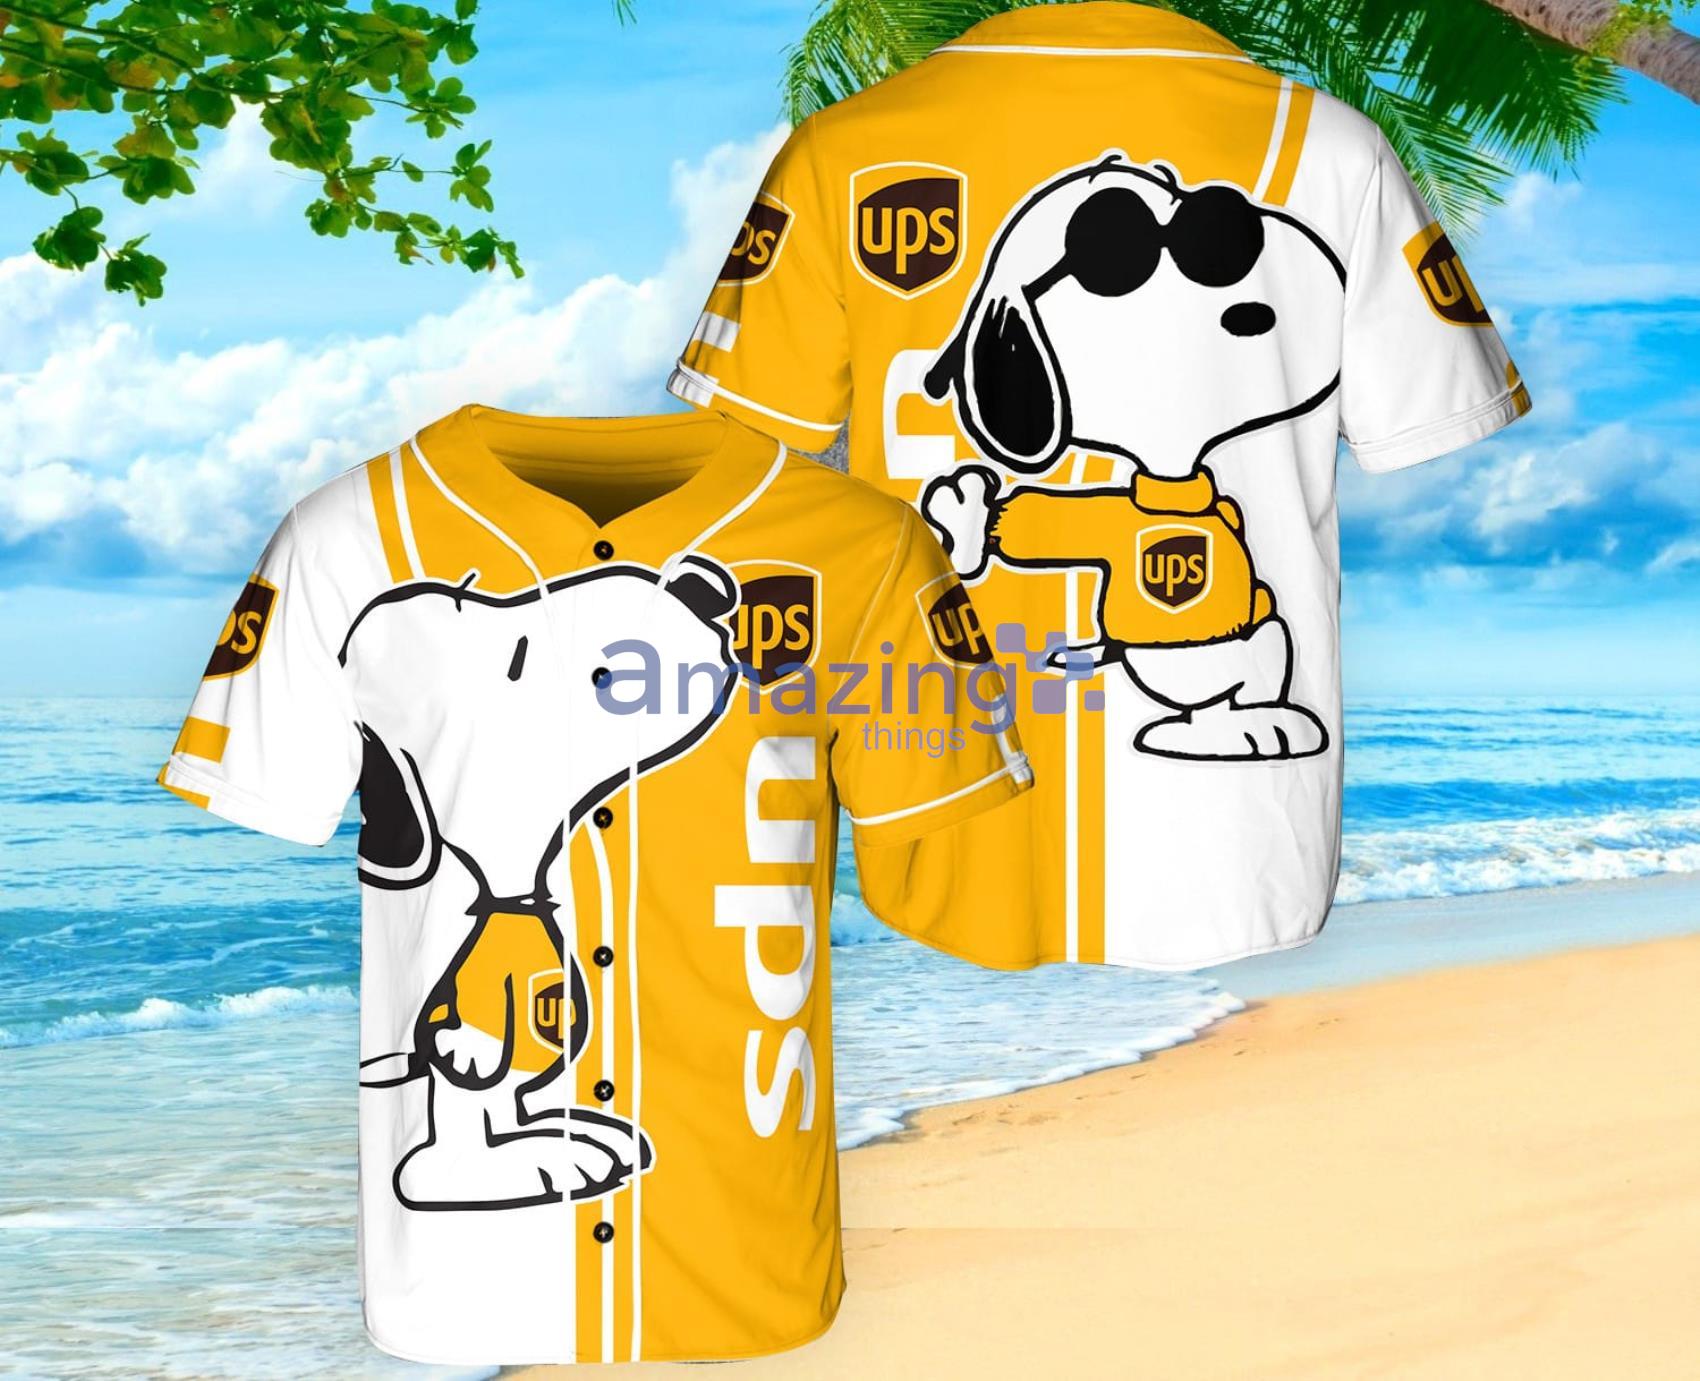 Snoopy Baseball Jersey, Cartoon Baseball Jersey Designed & Sold By